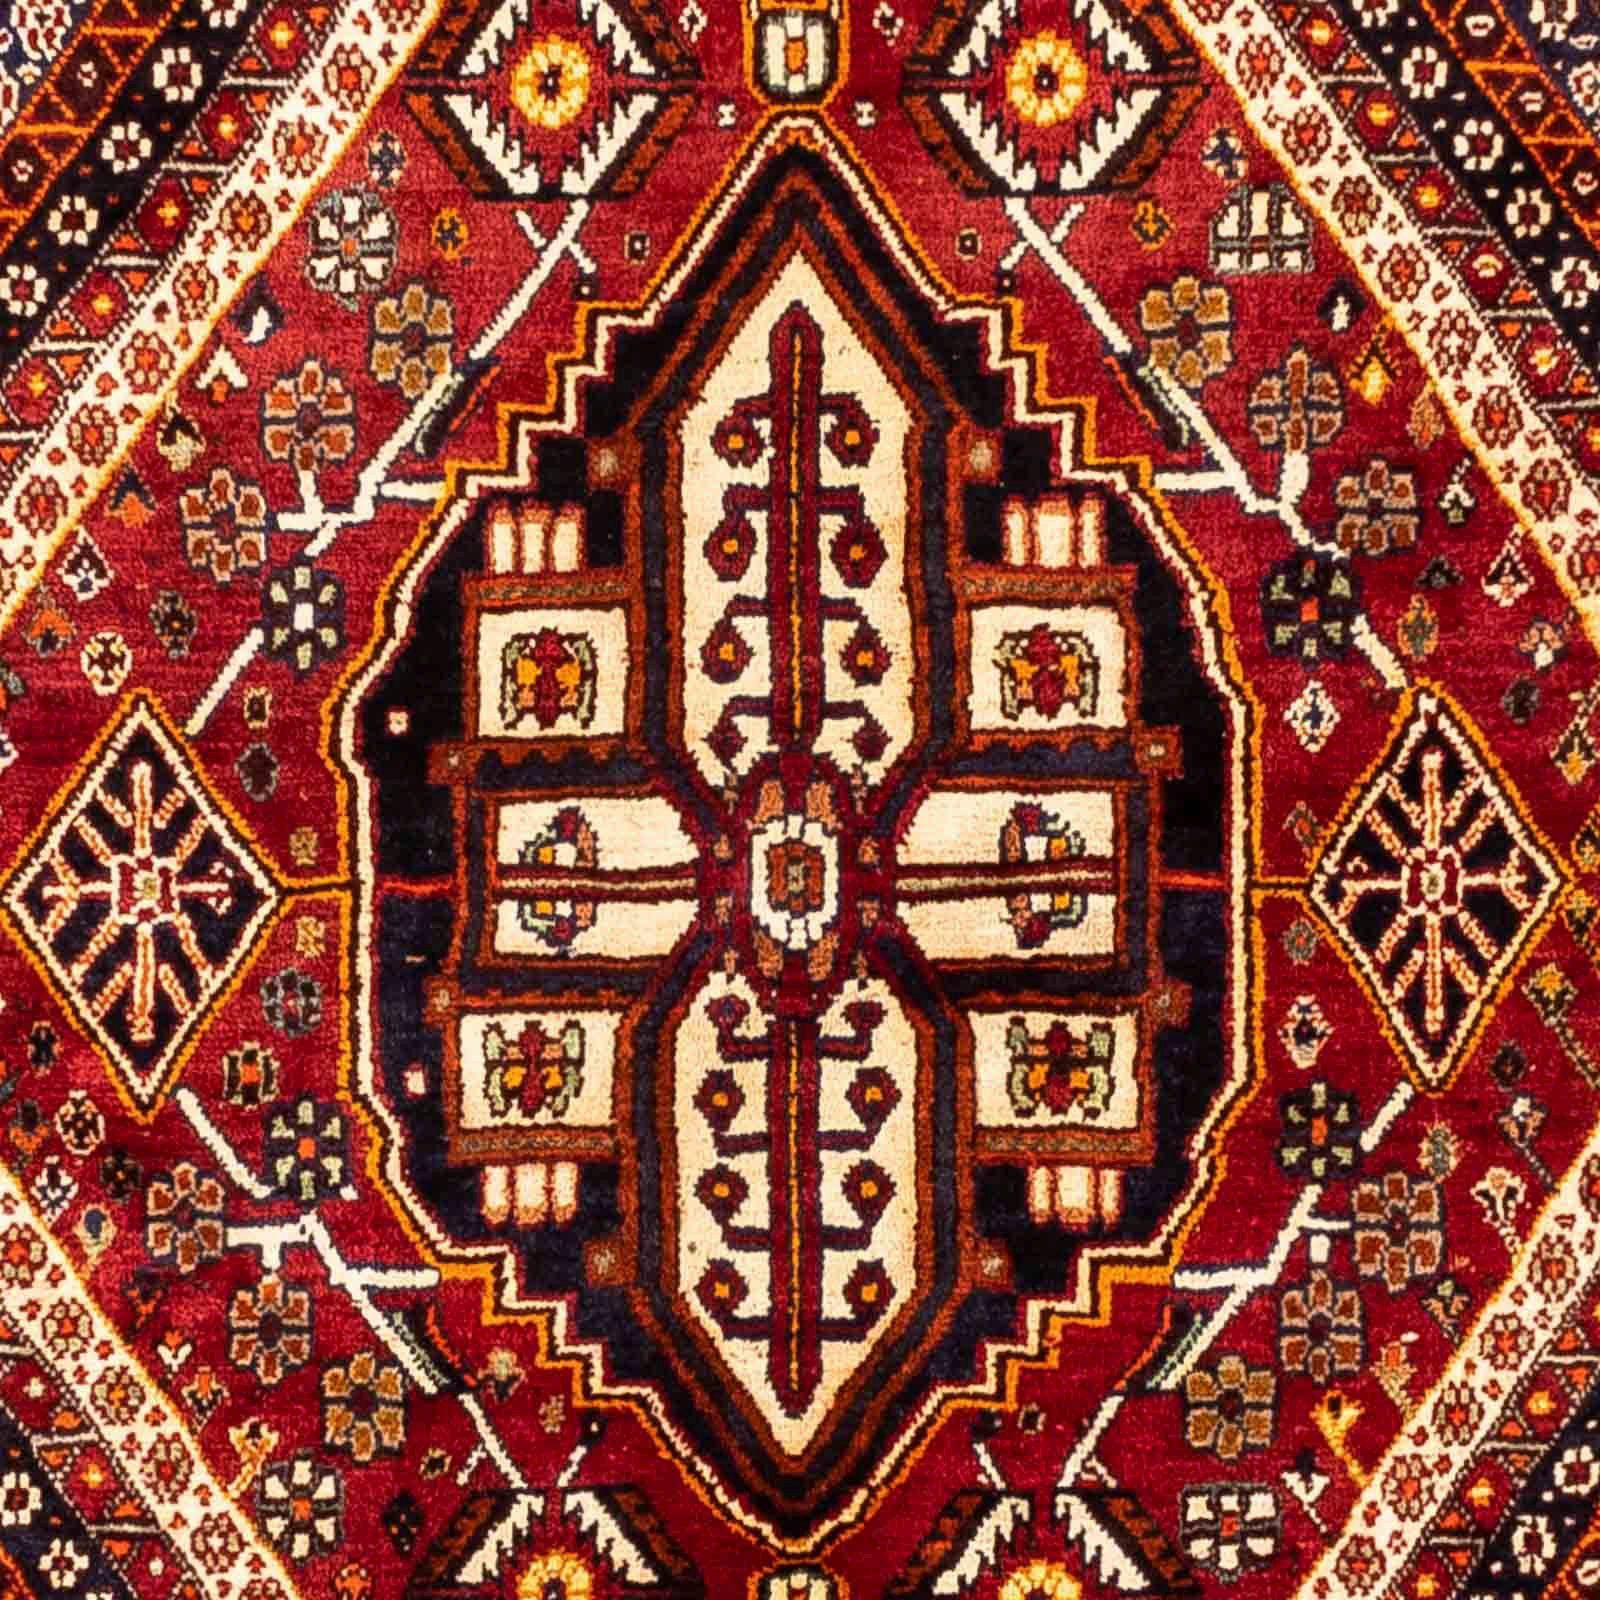 cm, mm, rechteckig, Unikat mit 160 x 1 Höhe: Shiraz Wollteppich Zertifikat morgenland, 253 Medaillon